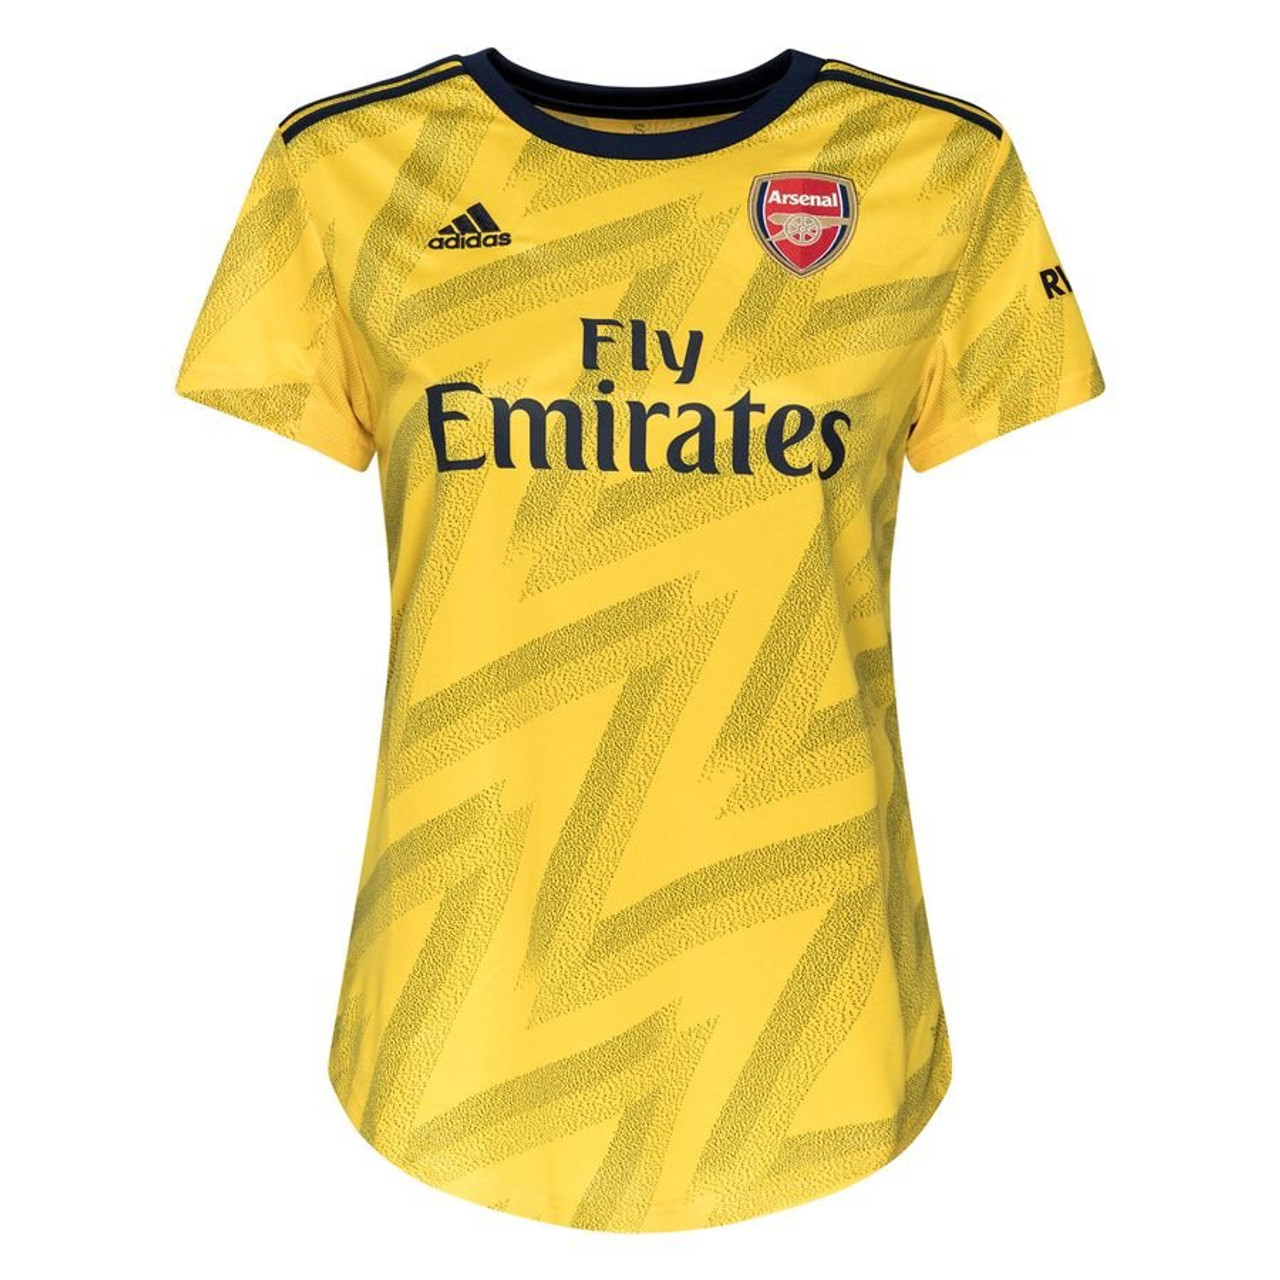 Arsenal 2019/20 Women's Away Jersey